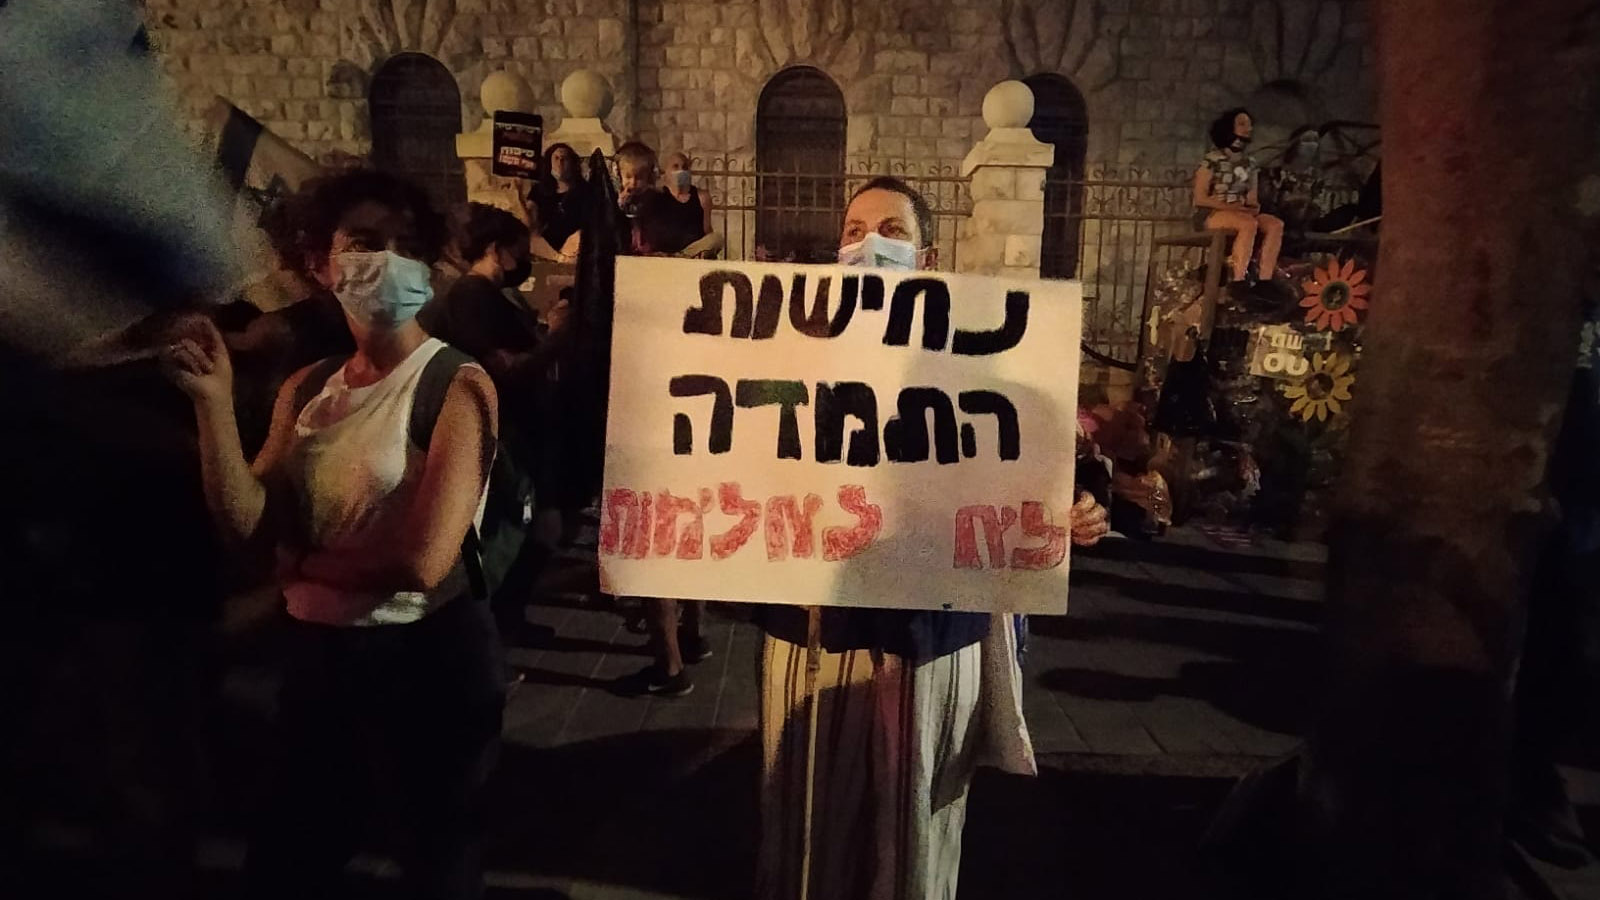 Chana, from Jerusalem, came to inspire hope. (Photo: Yahel Faraj)